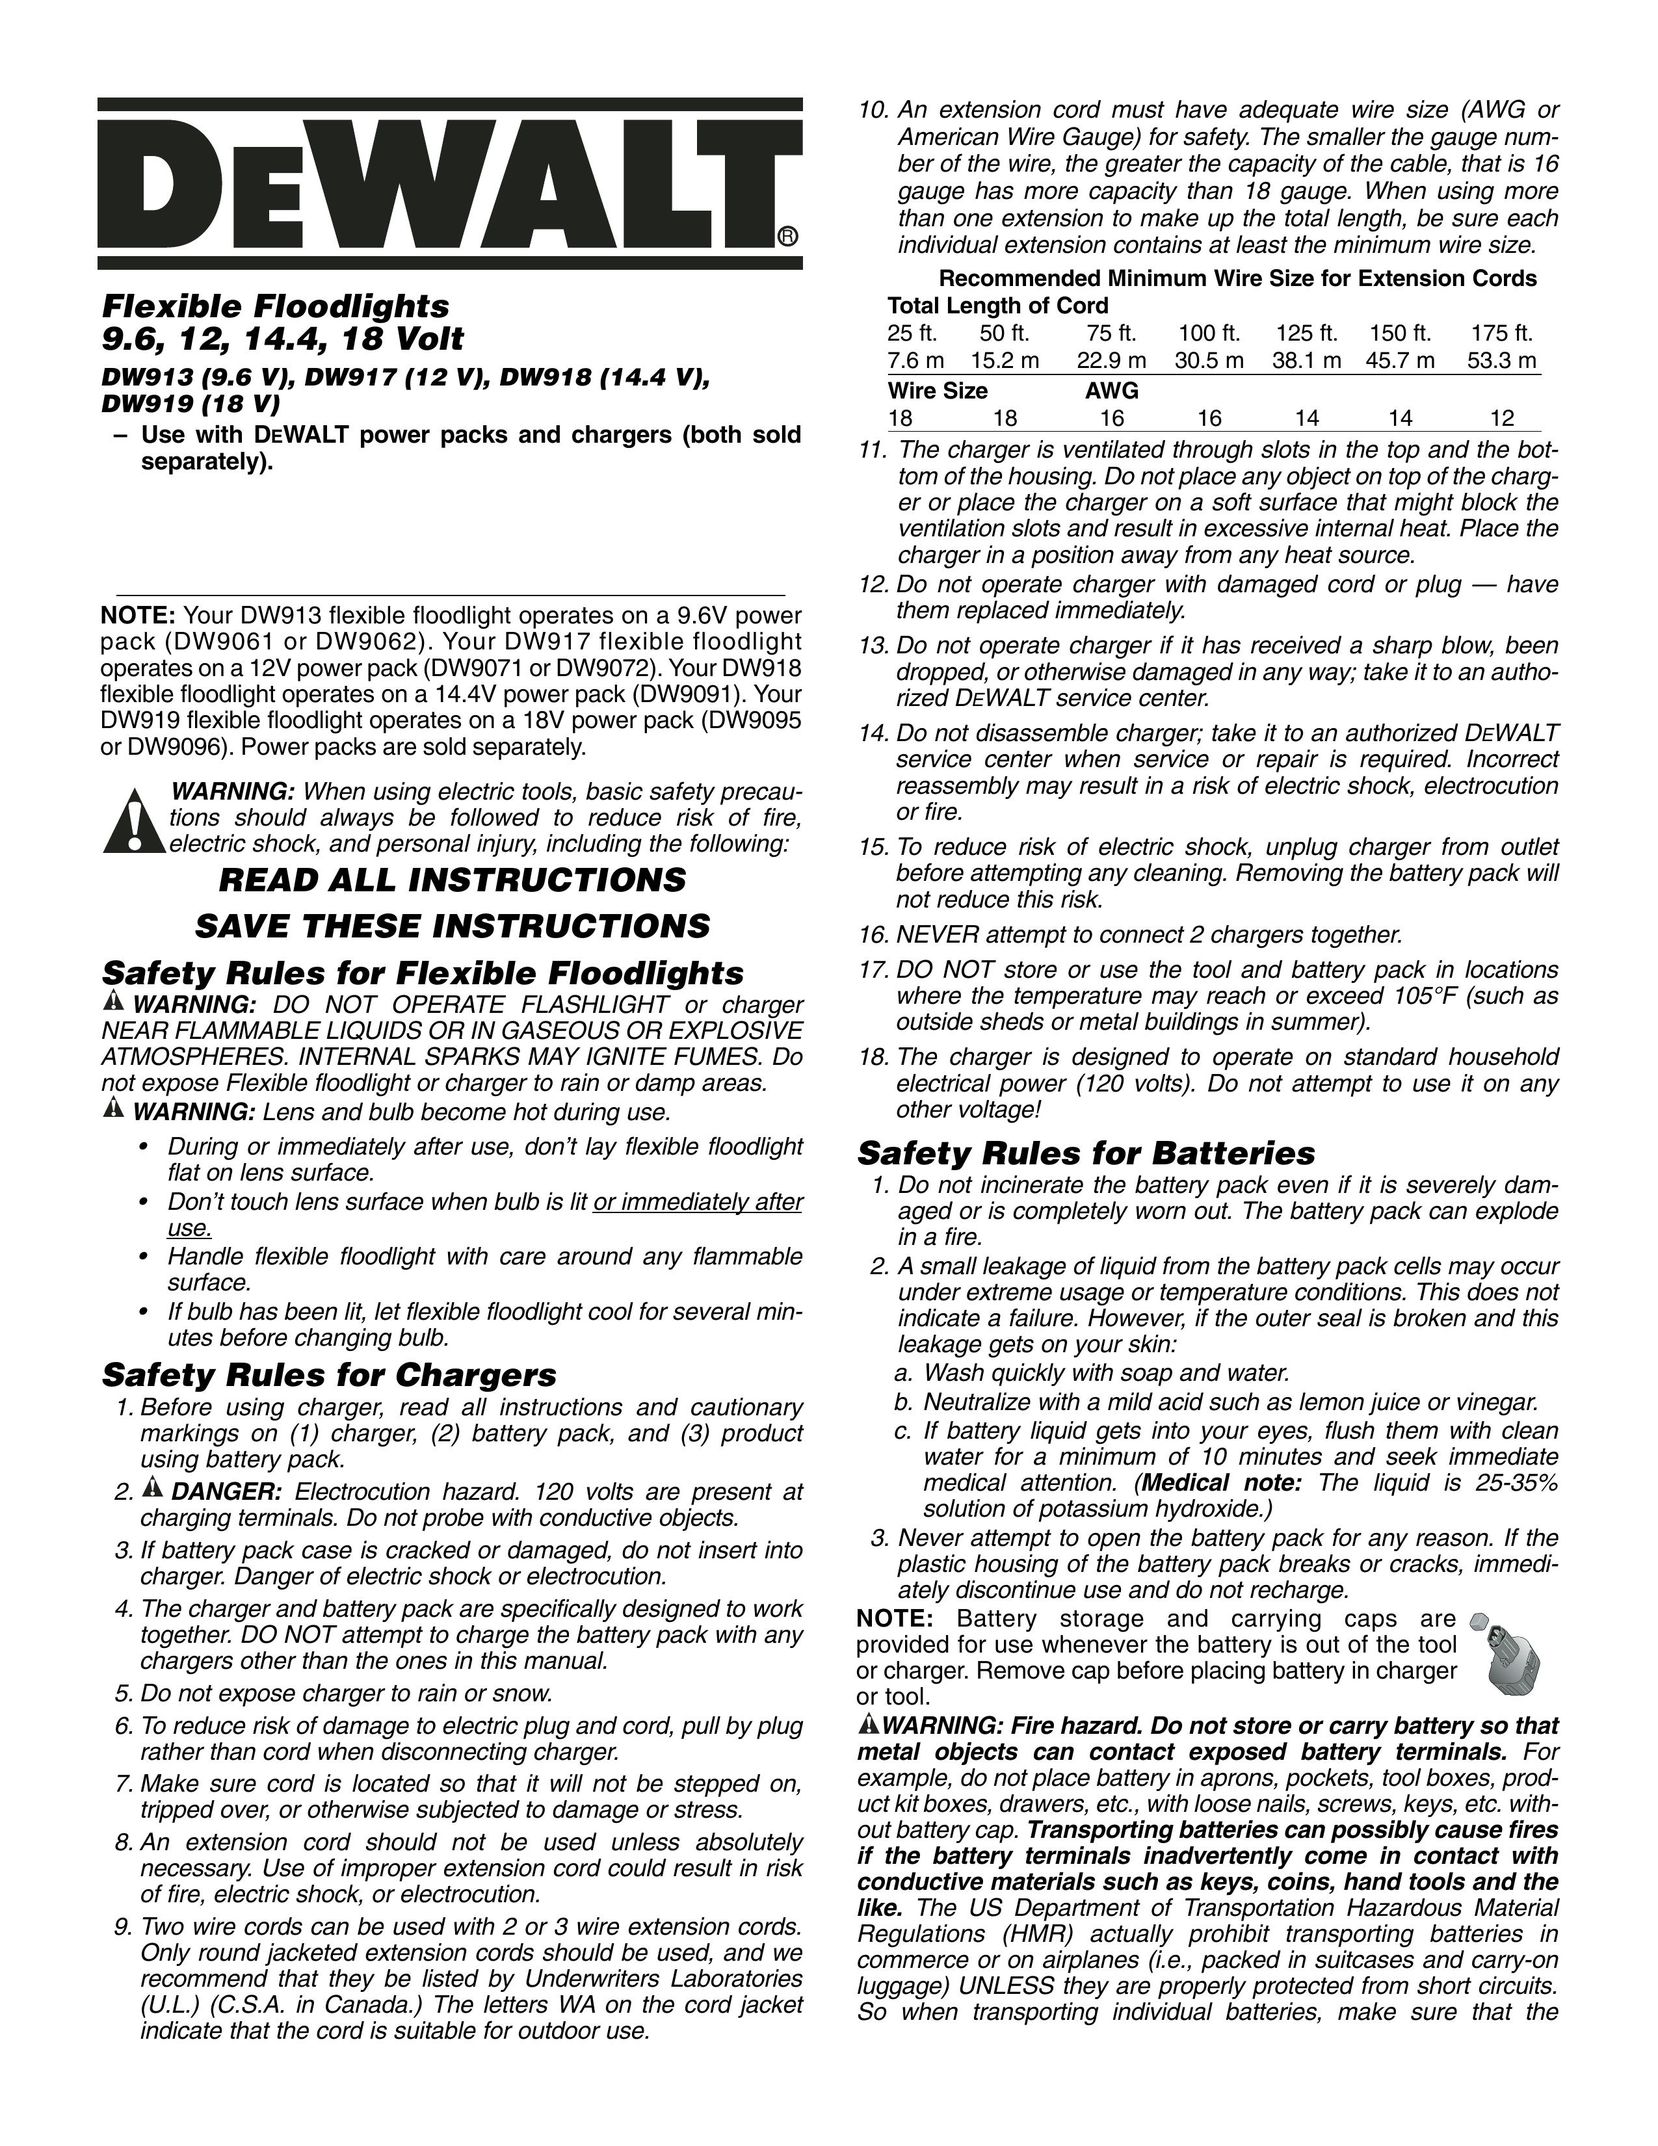 DeWalt DW919 Home Safety Product User Manual